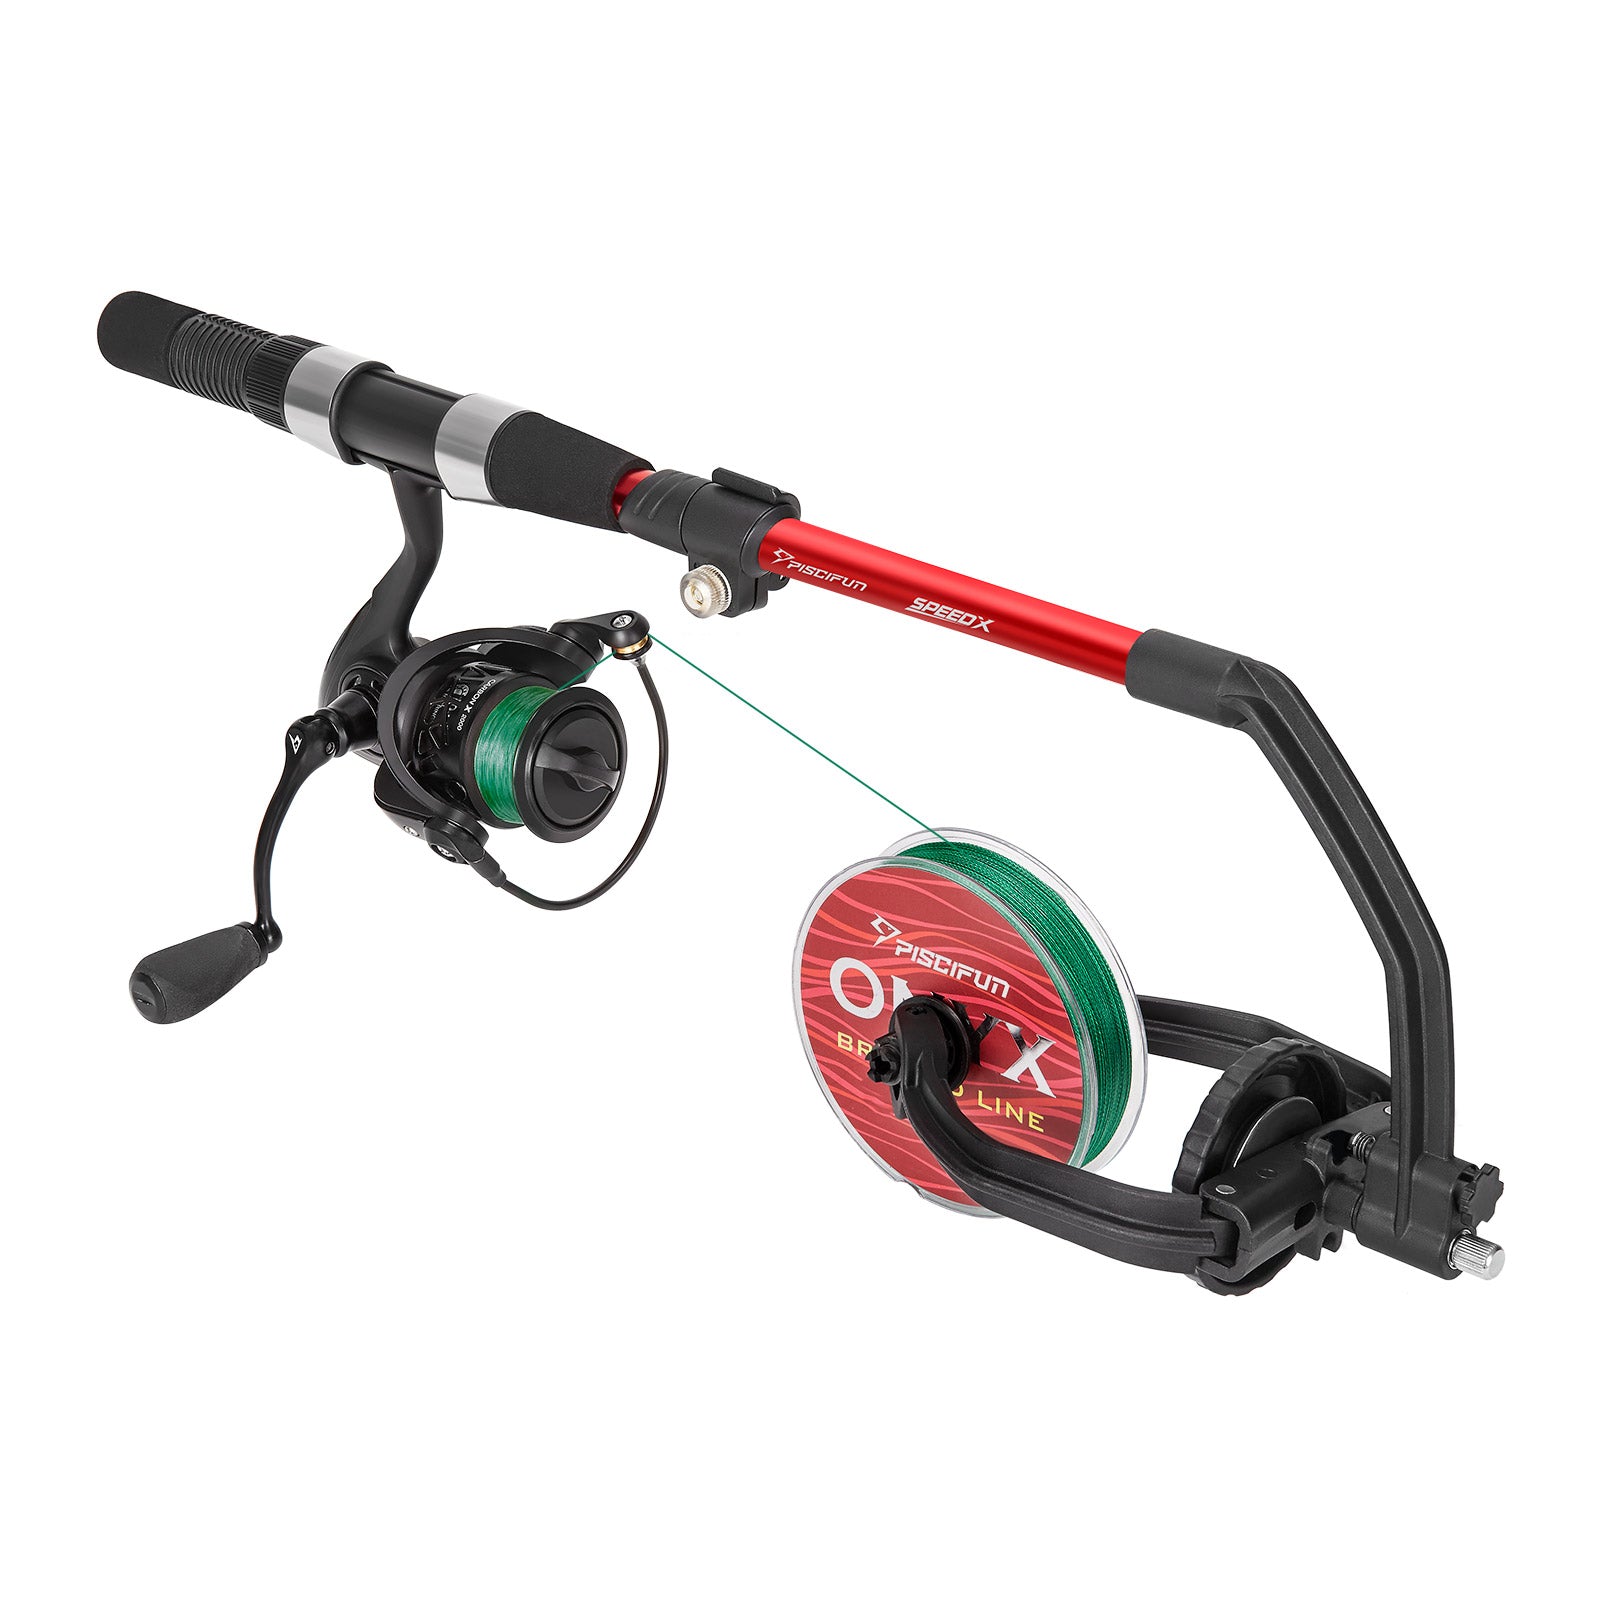 Piscifun® Speed X Fishing Line Spooler Machine with Unwinding Function